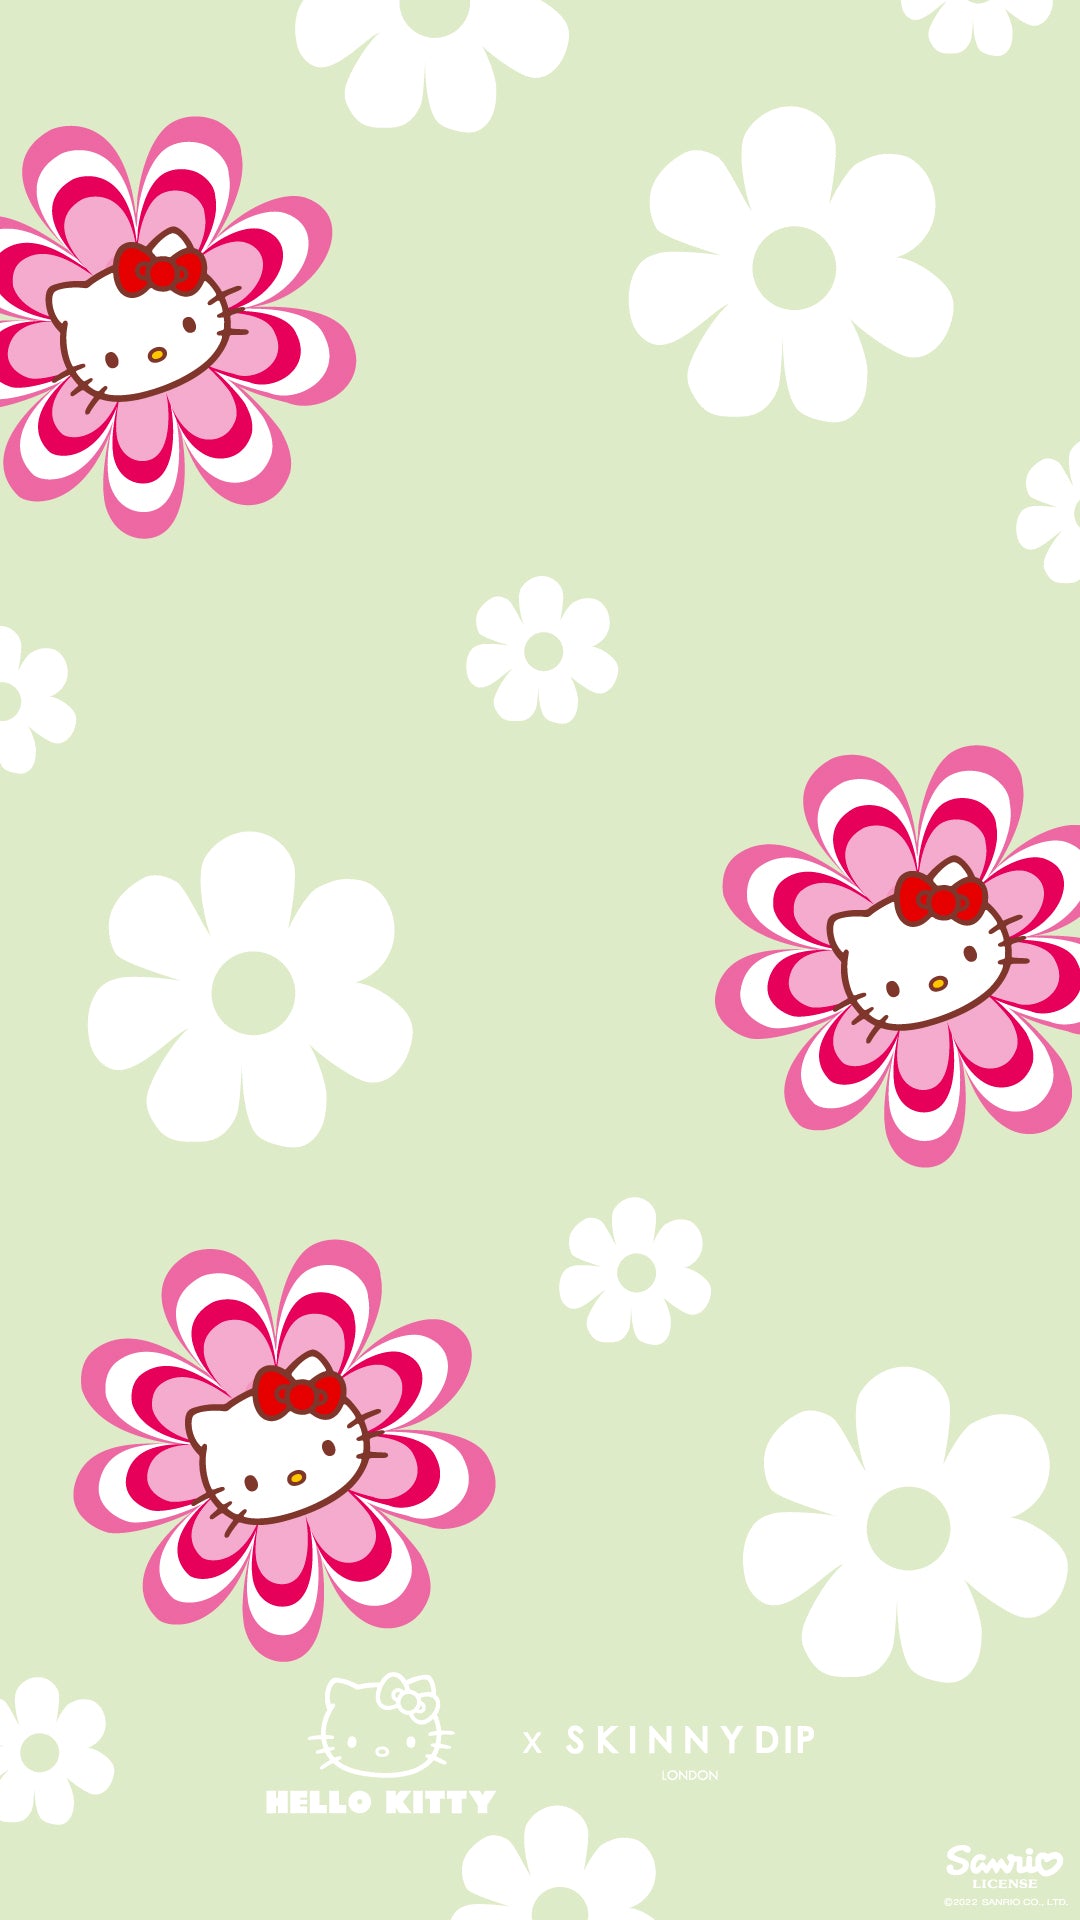 Hello Kitty x Skinnydip Drop 2 Phone Wallpaper 04